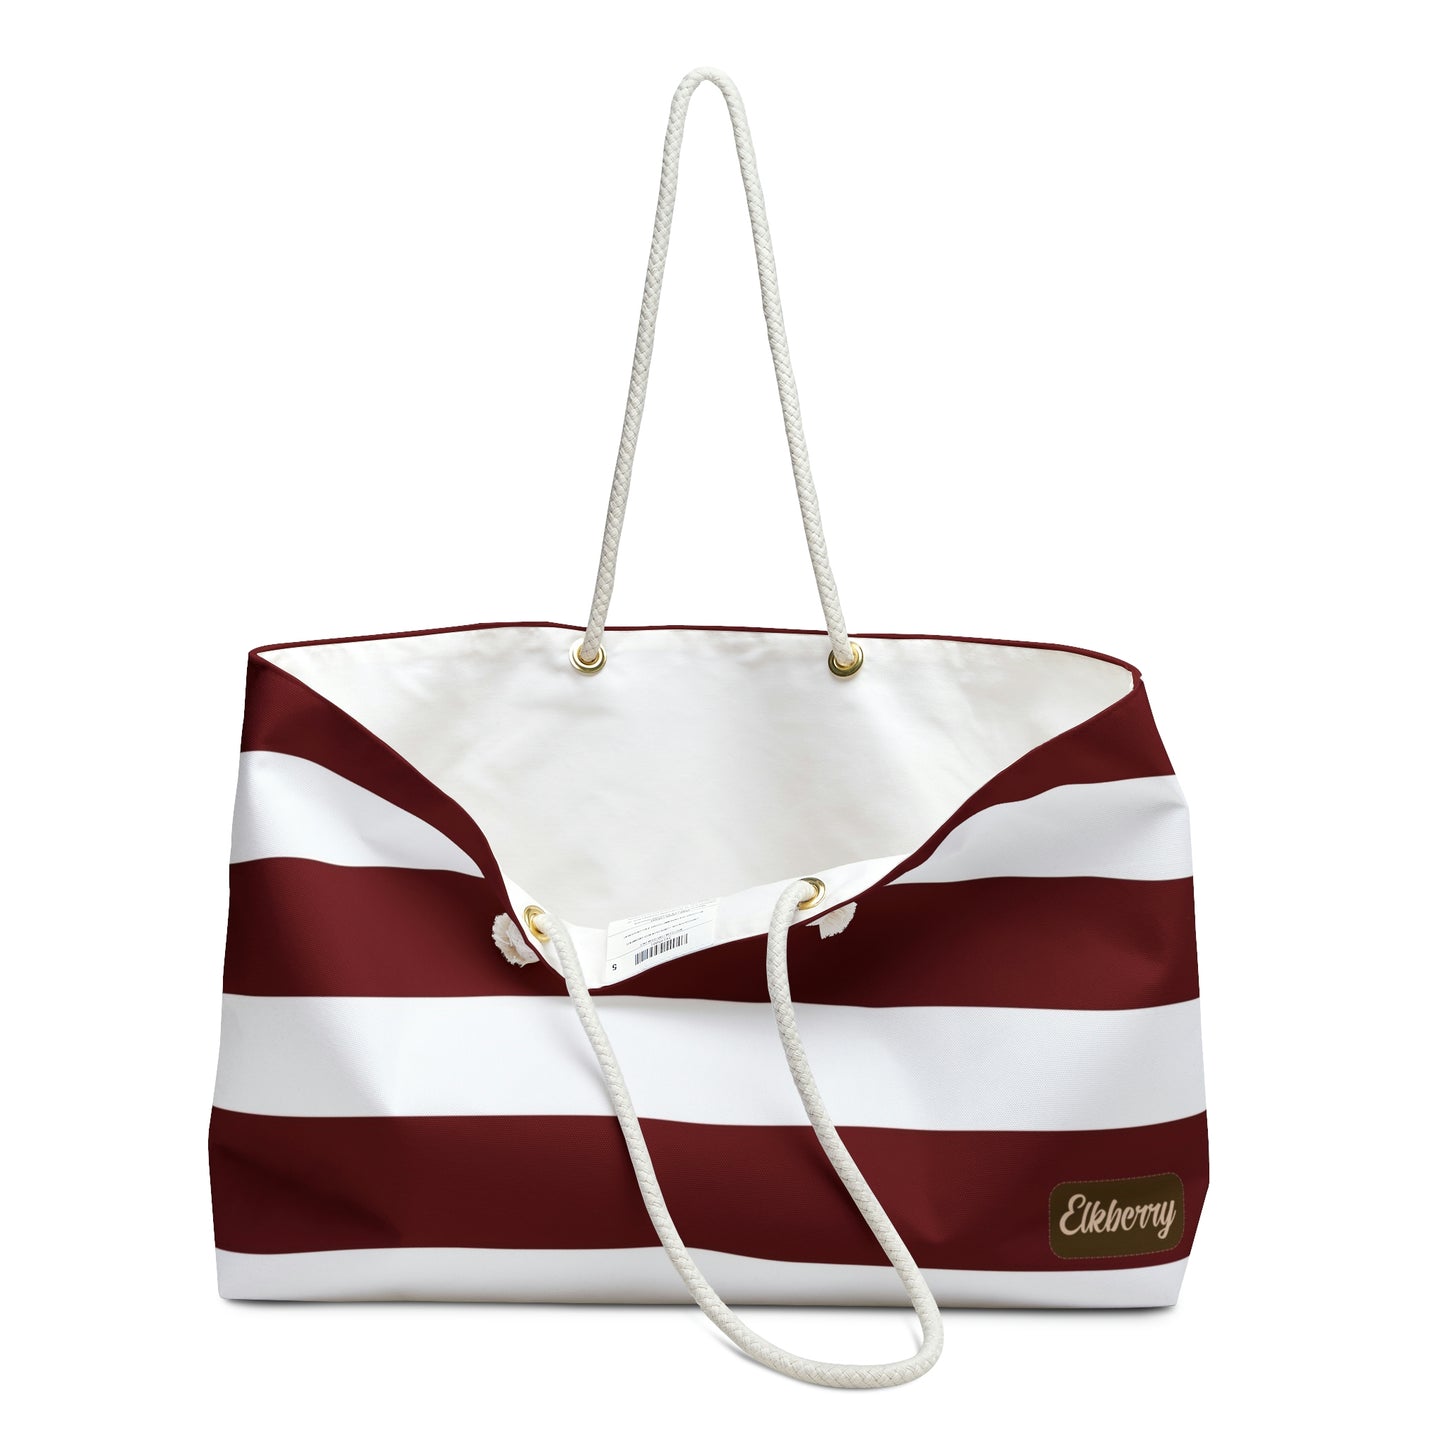 Weekender Tote Bag - Berry/White Stripes